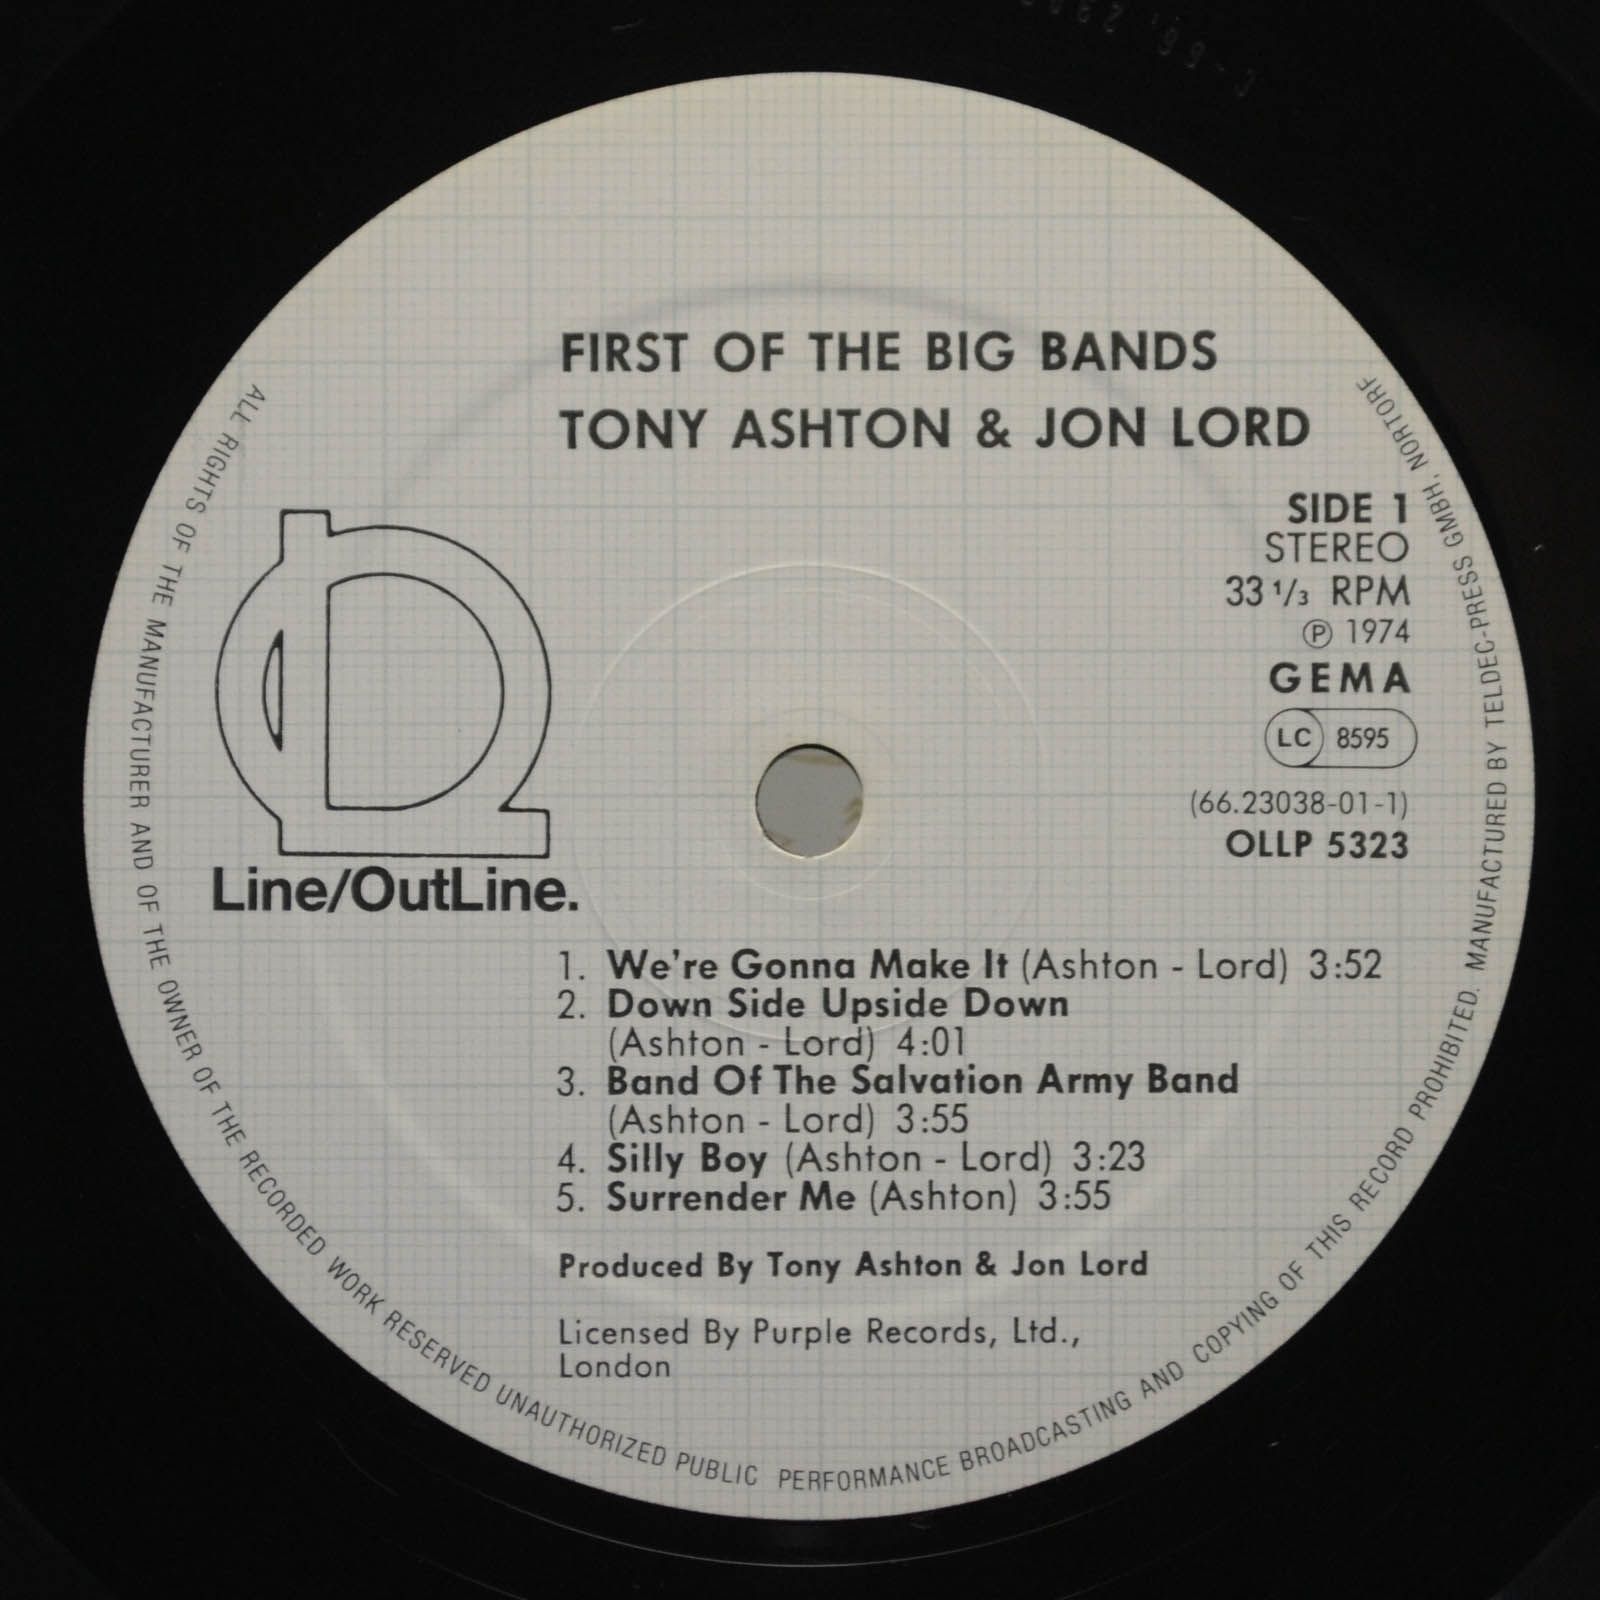 Tony Ashton & Jon Lord — First Of The Big Bands, 1974